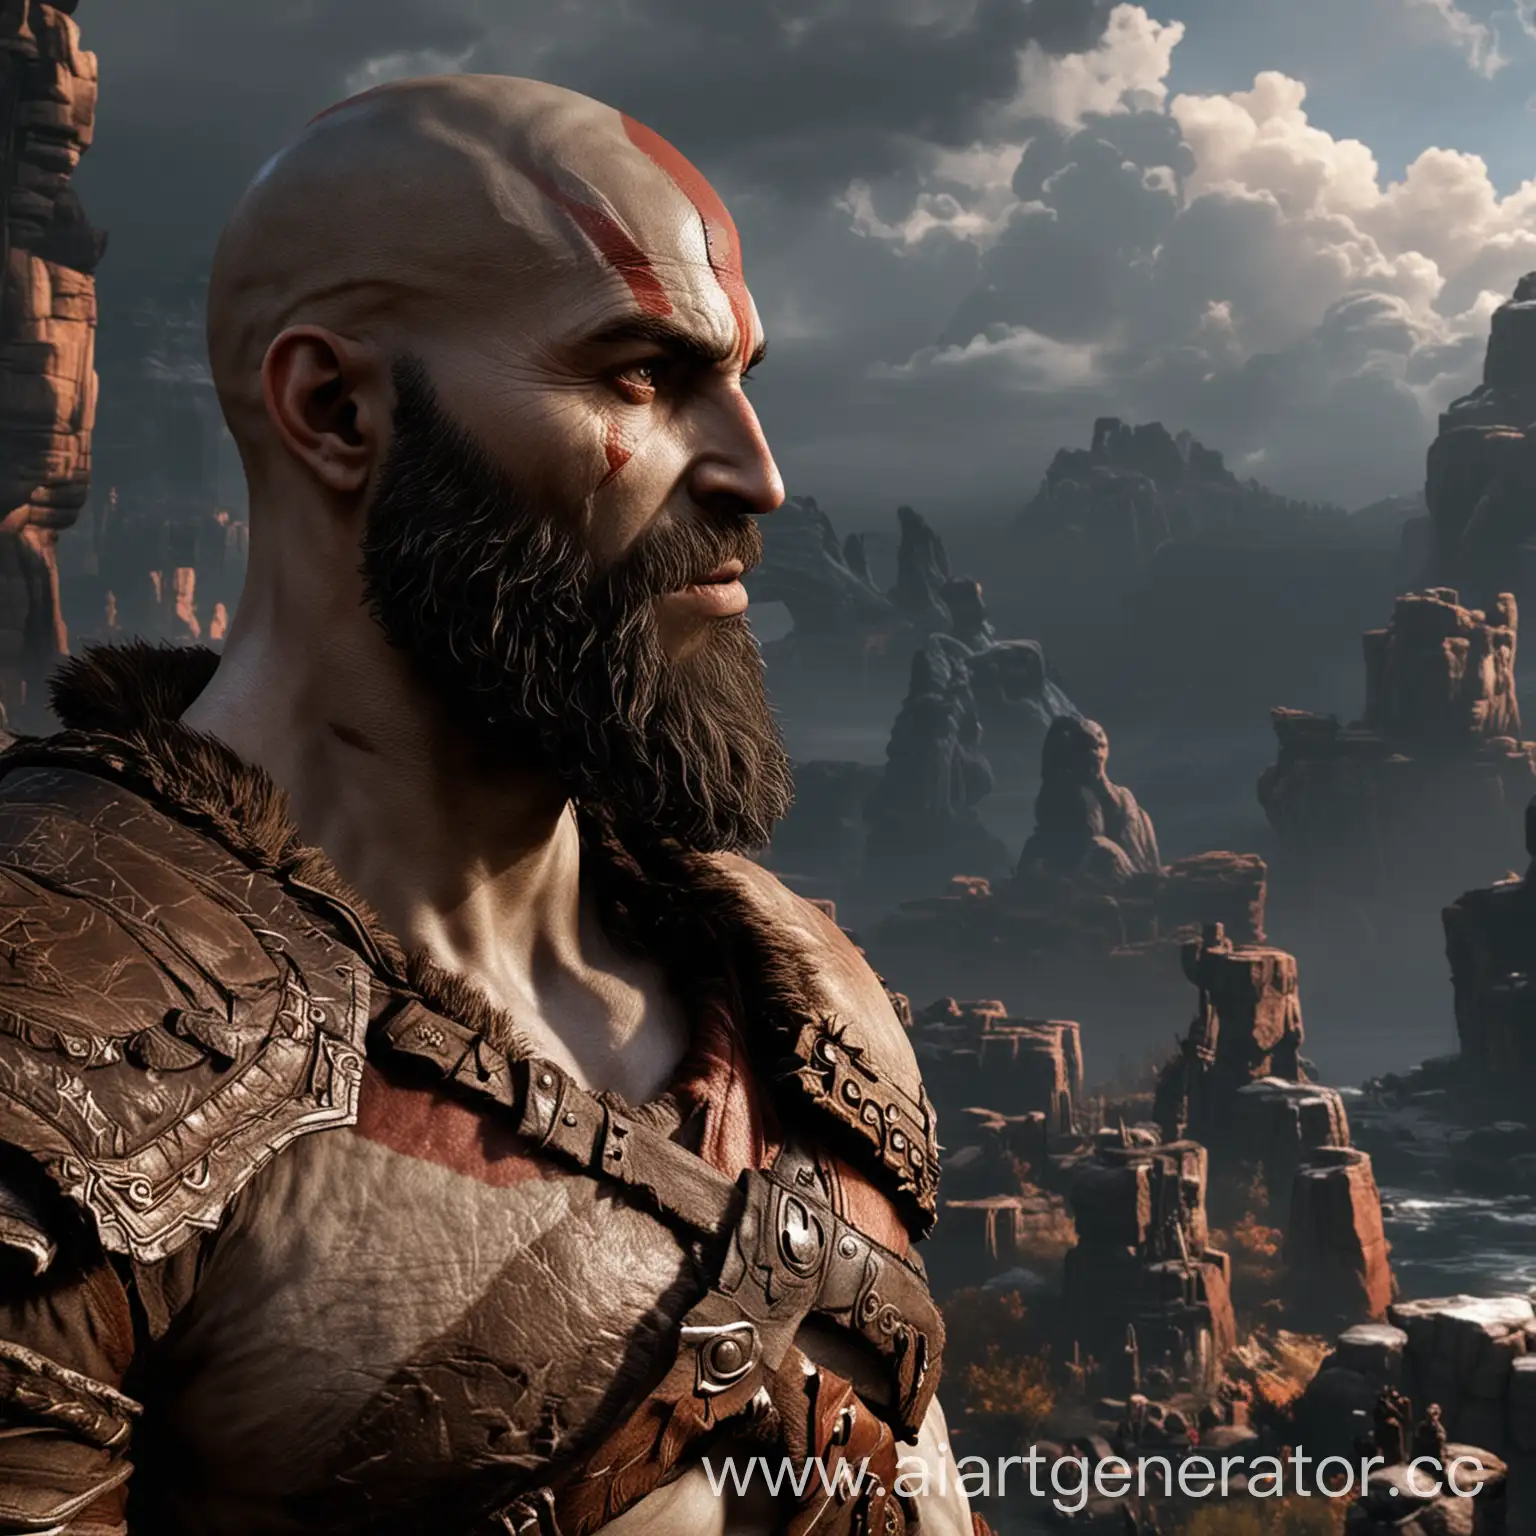 Kratos-Contemplates-the-Horizon-Epic-Game-Character-Art